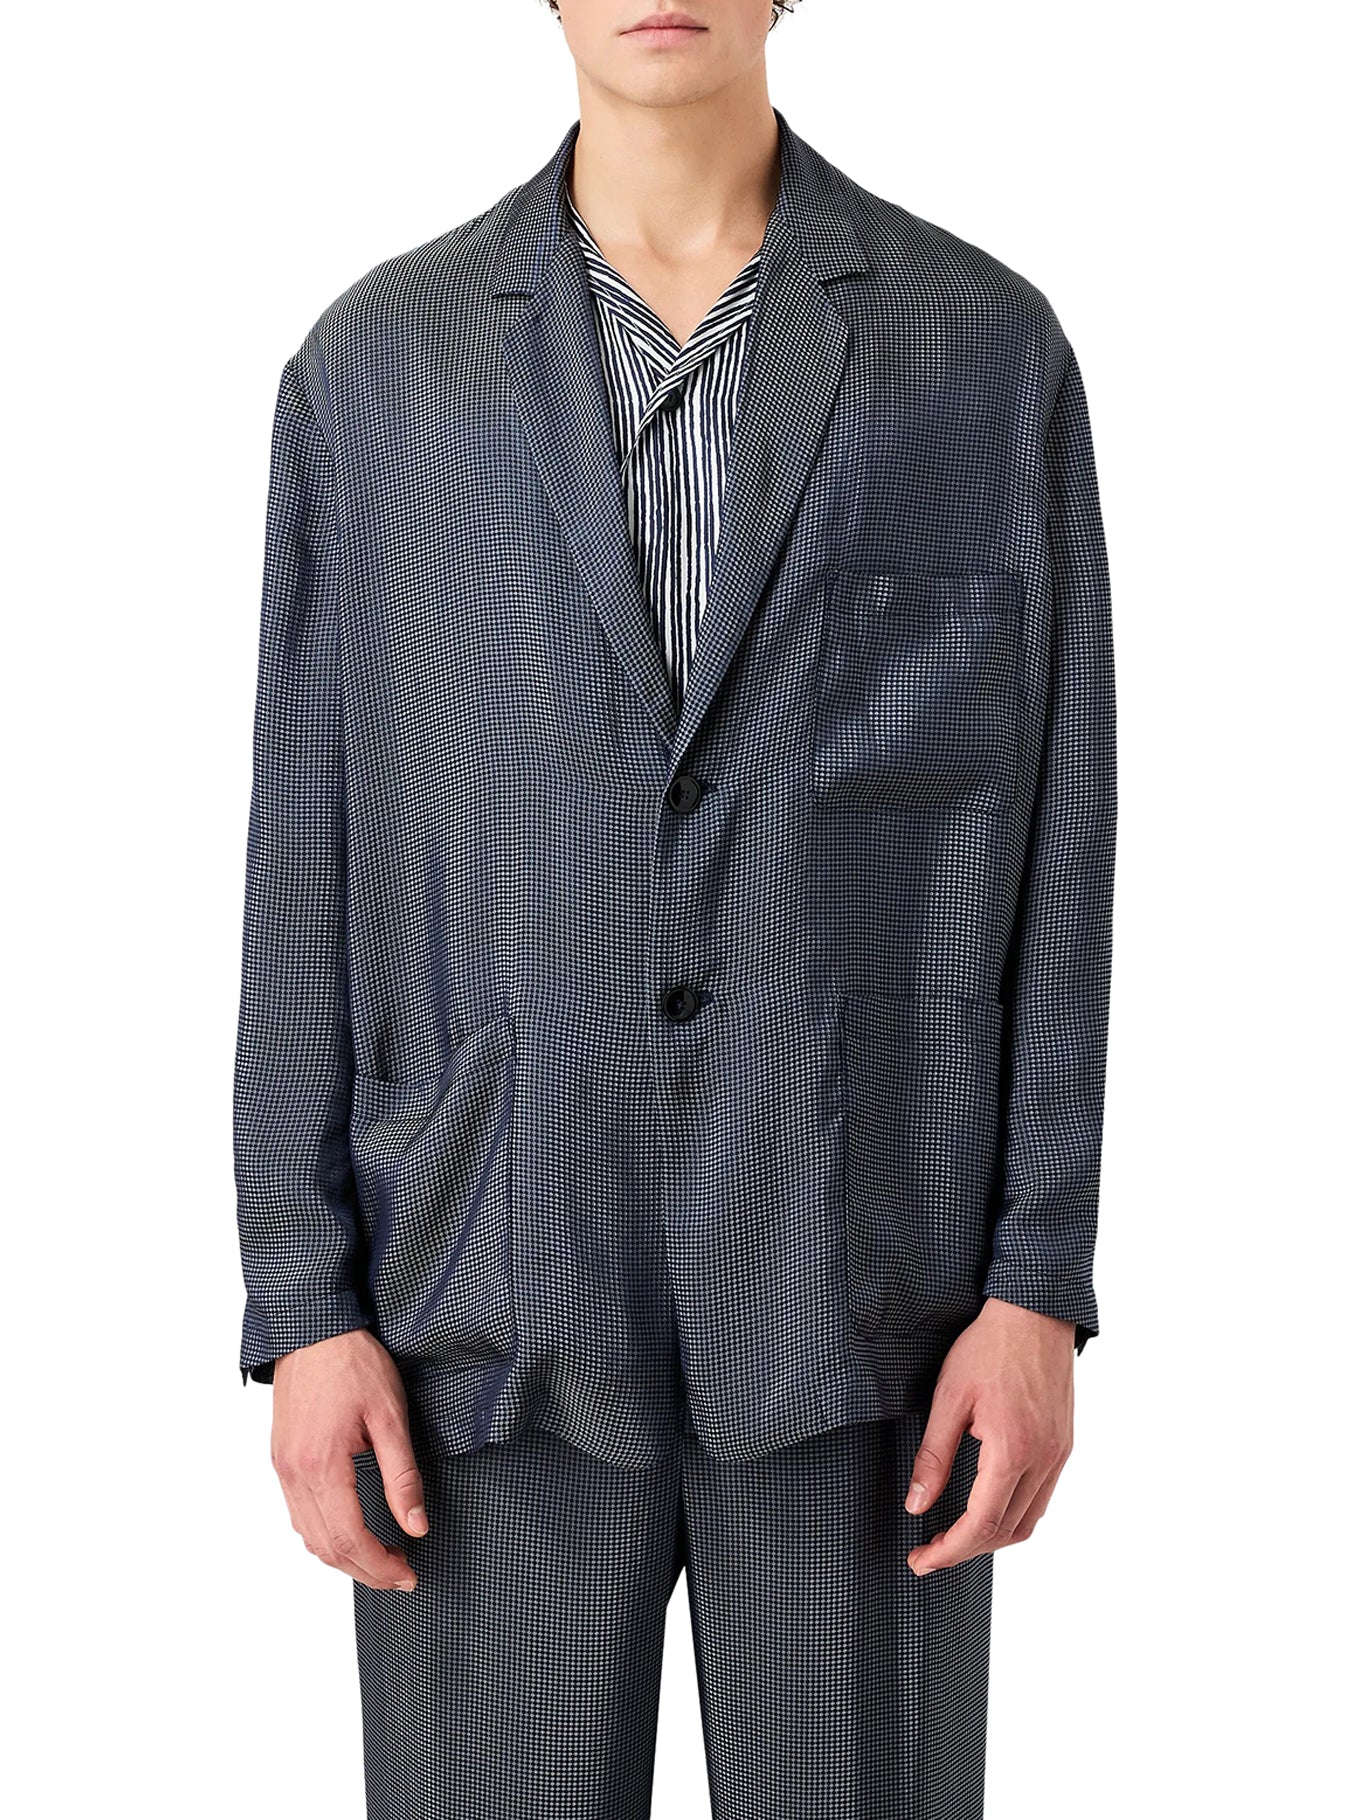 Single-breasted jacket in ASV jacquard viscose blend